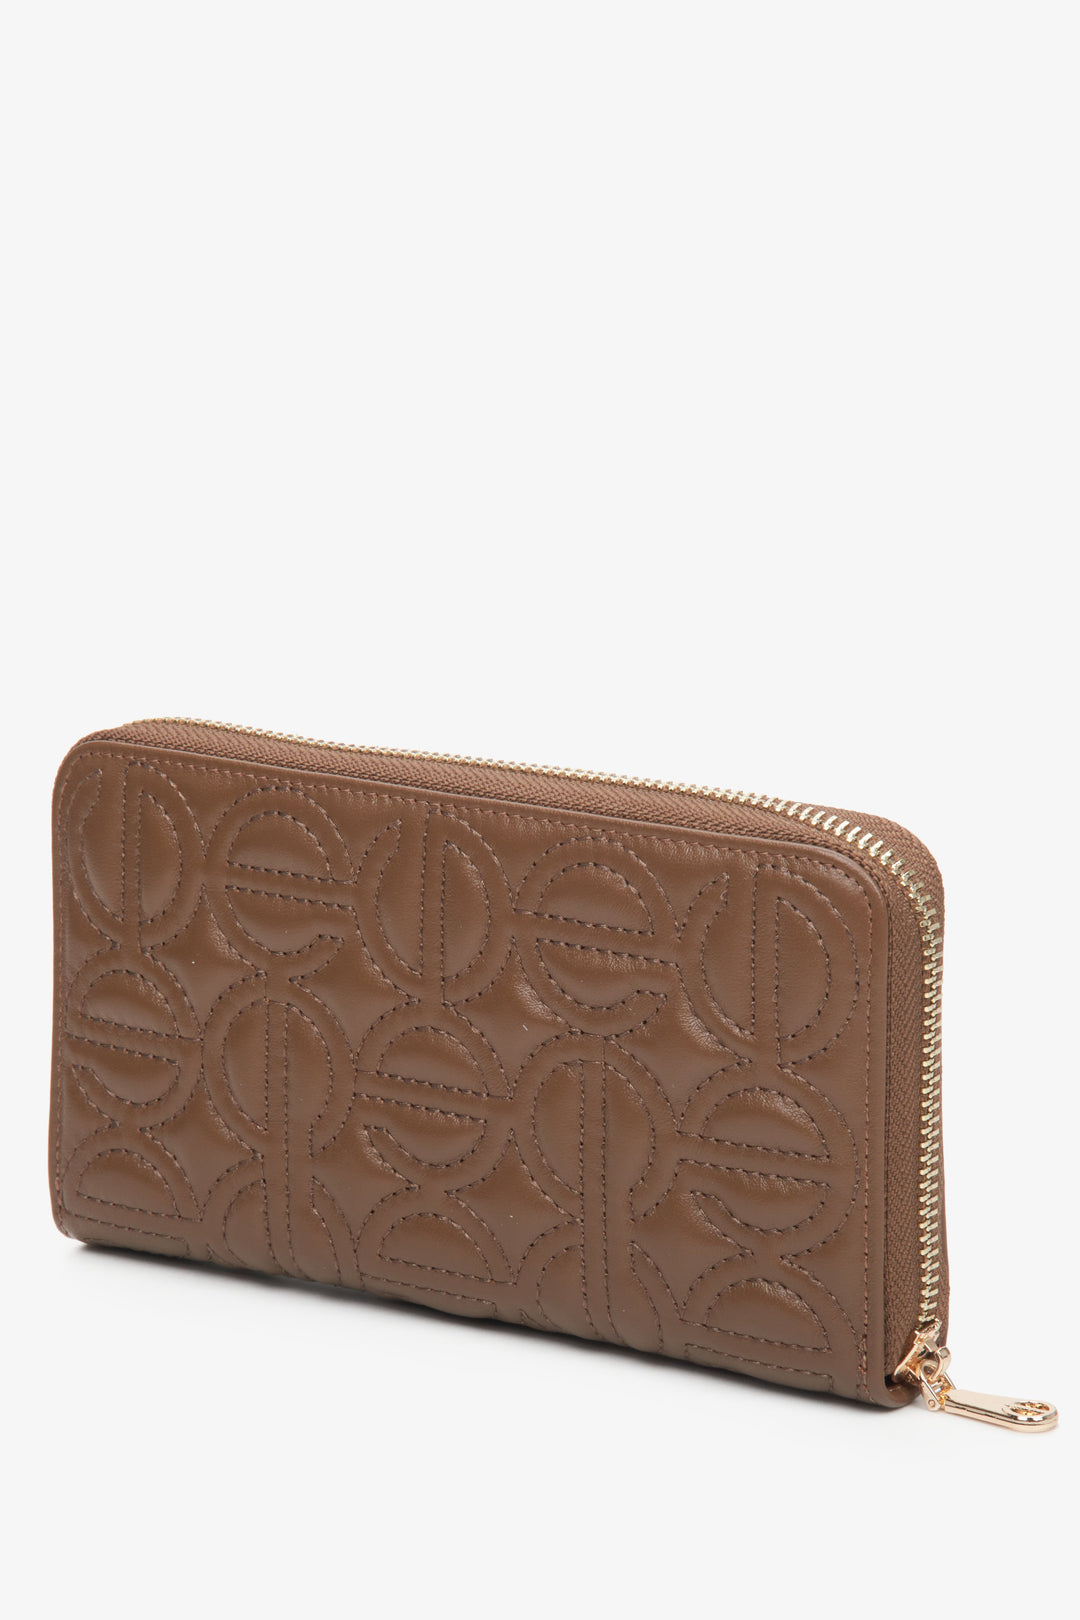 Women's dark brown leather continental wallet by Estro